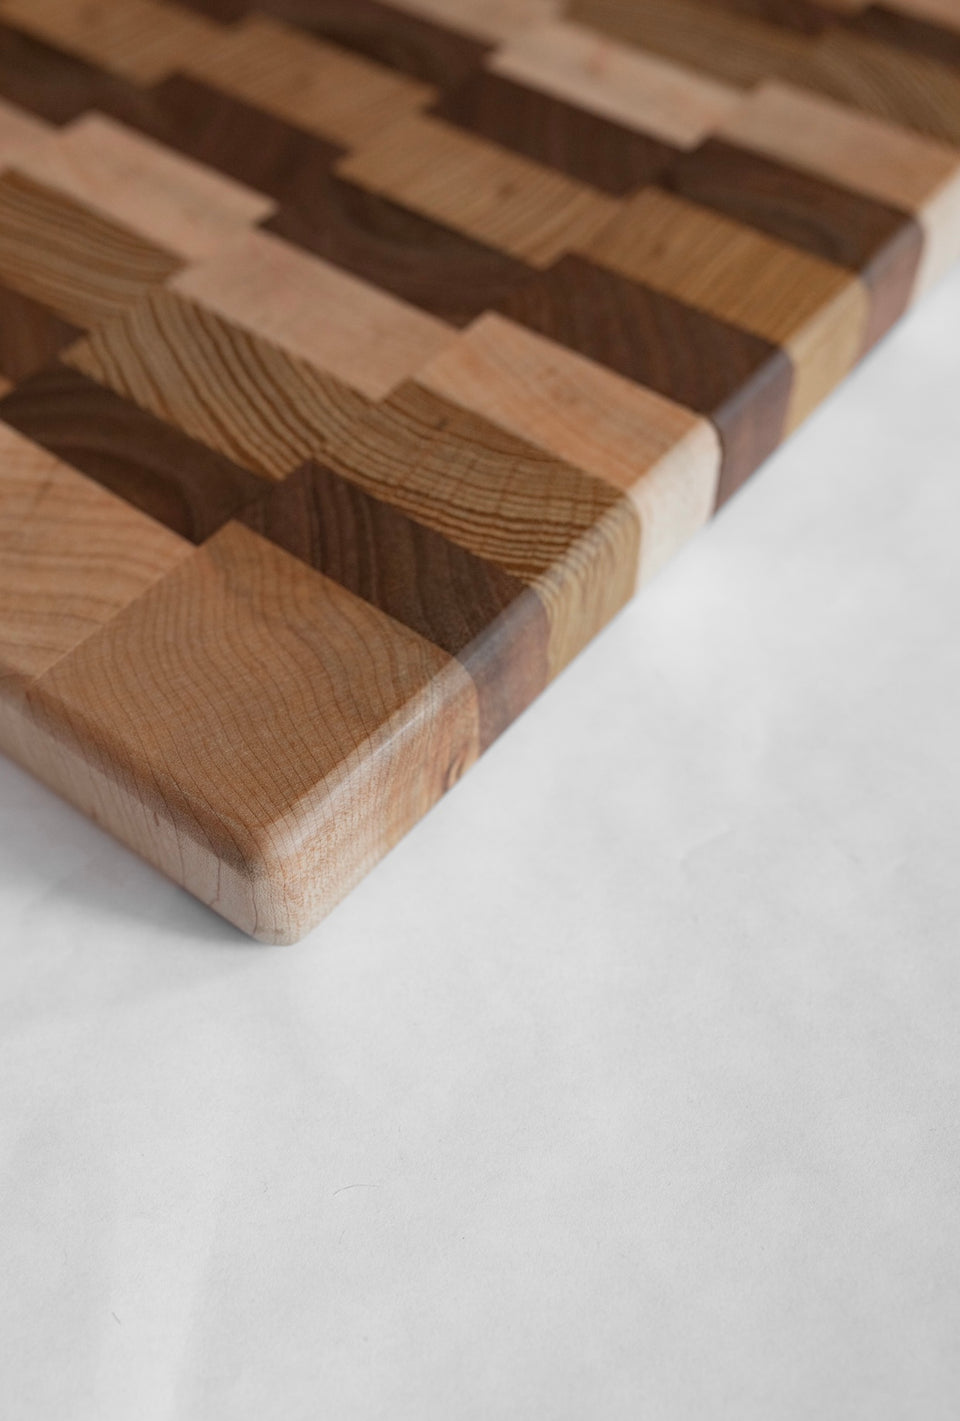 Handmade Wood Cutting Board- 12x13